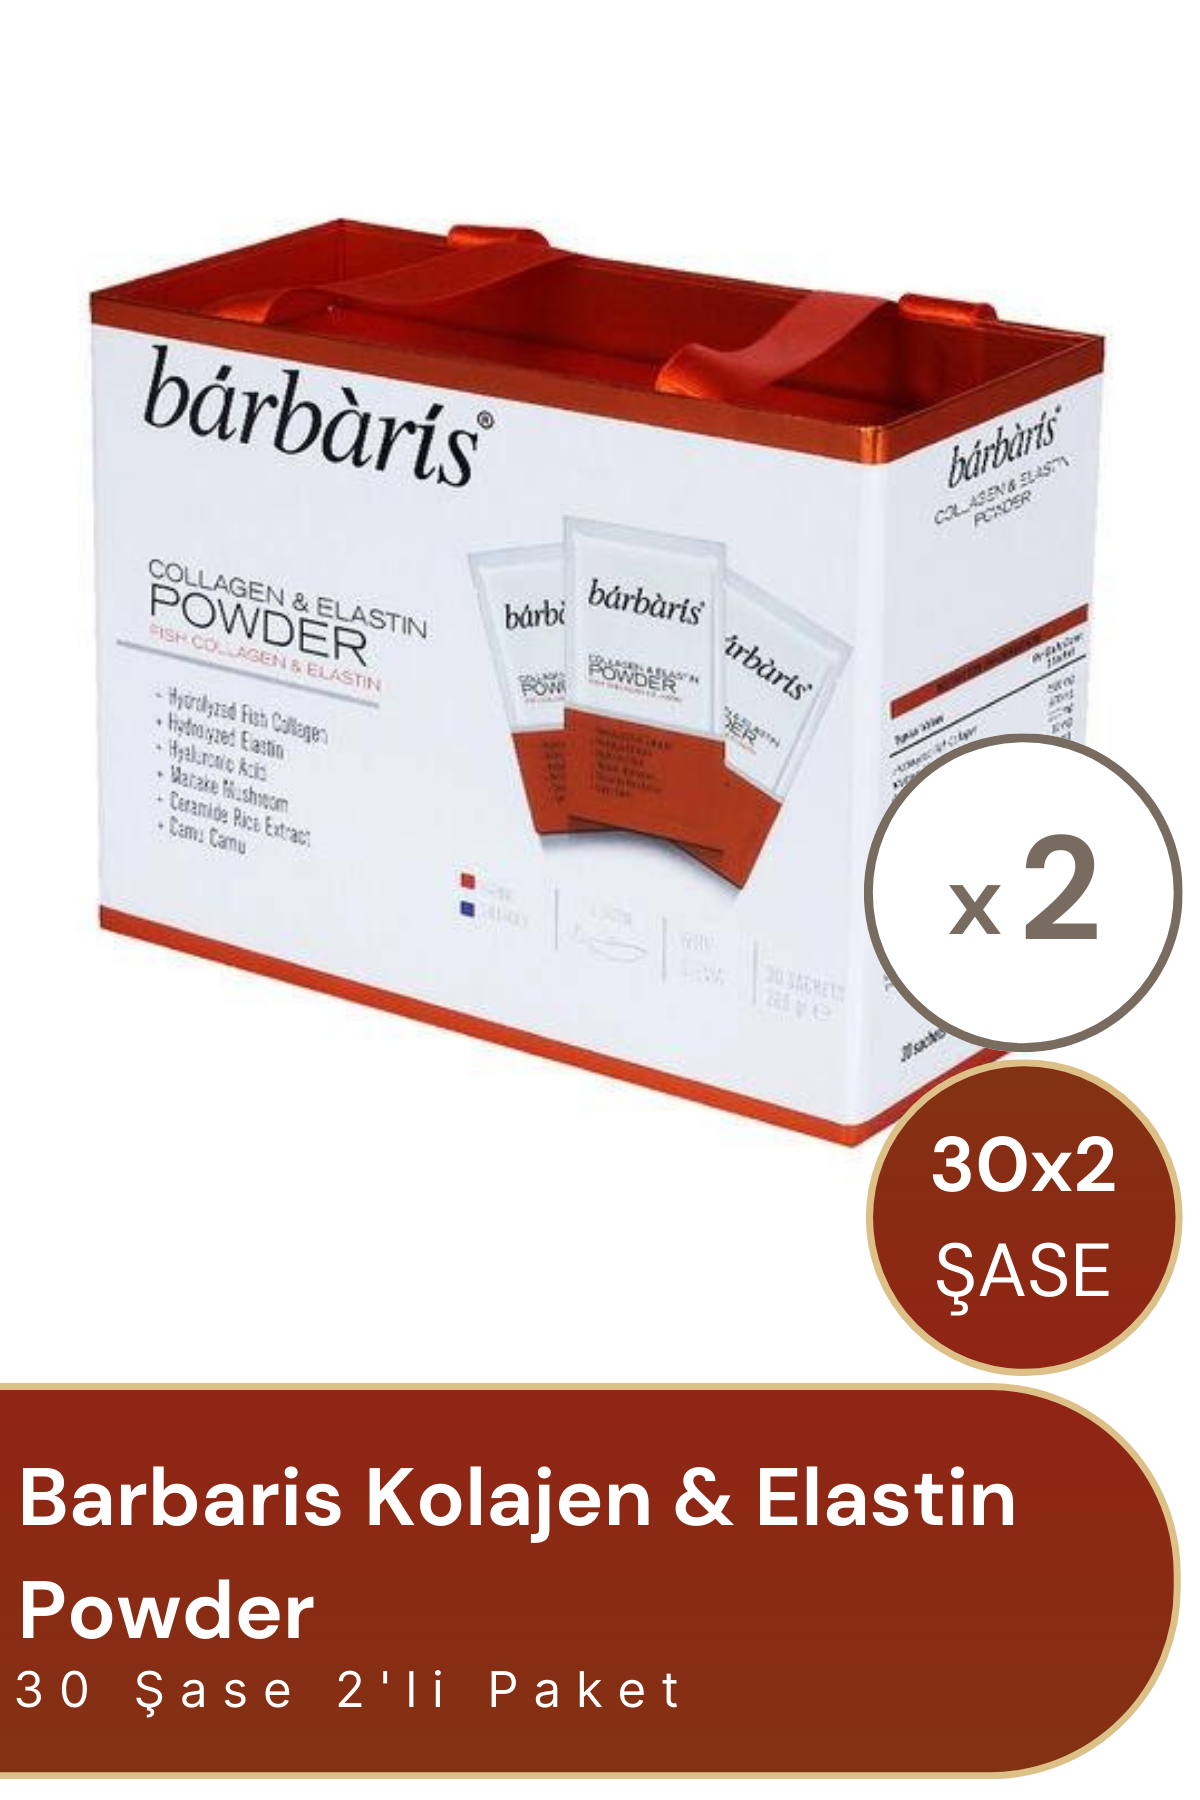 Barbaris Kolajen & Elastin Powder 30 Şase 2'li Paket